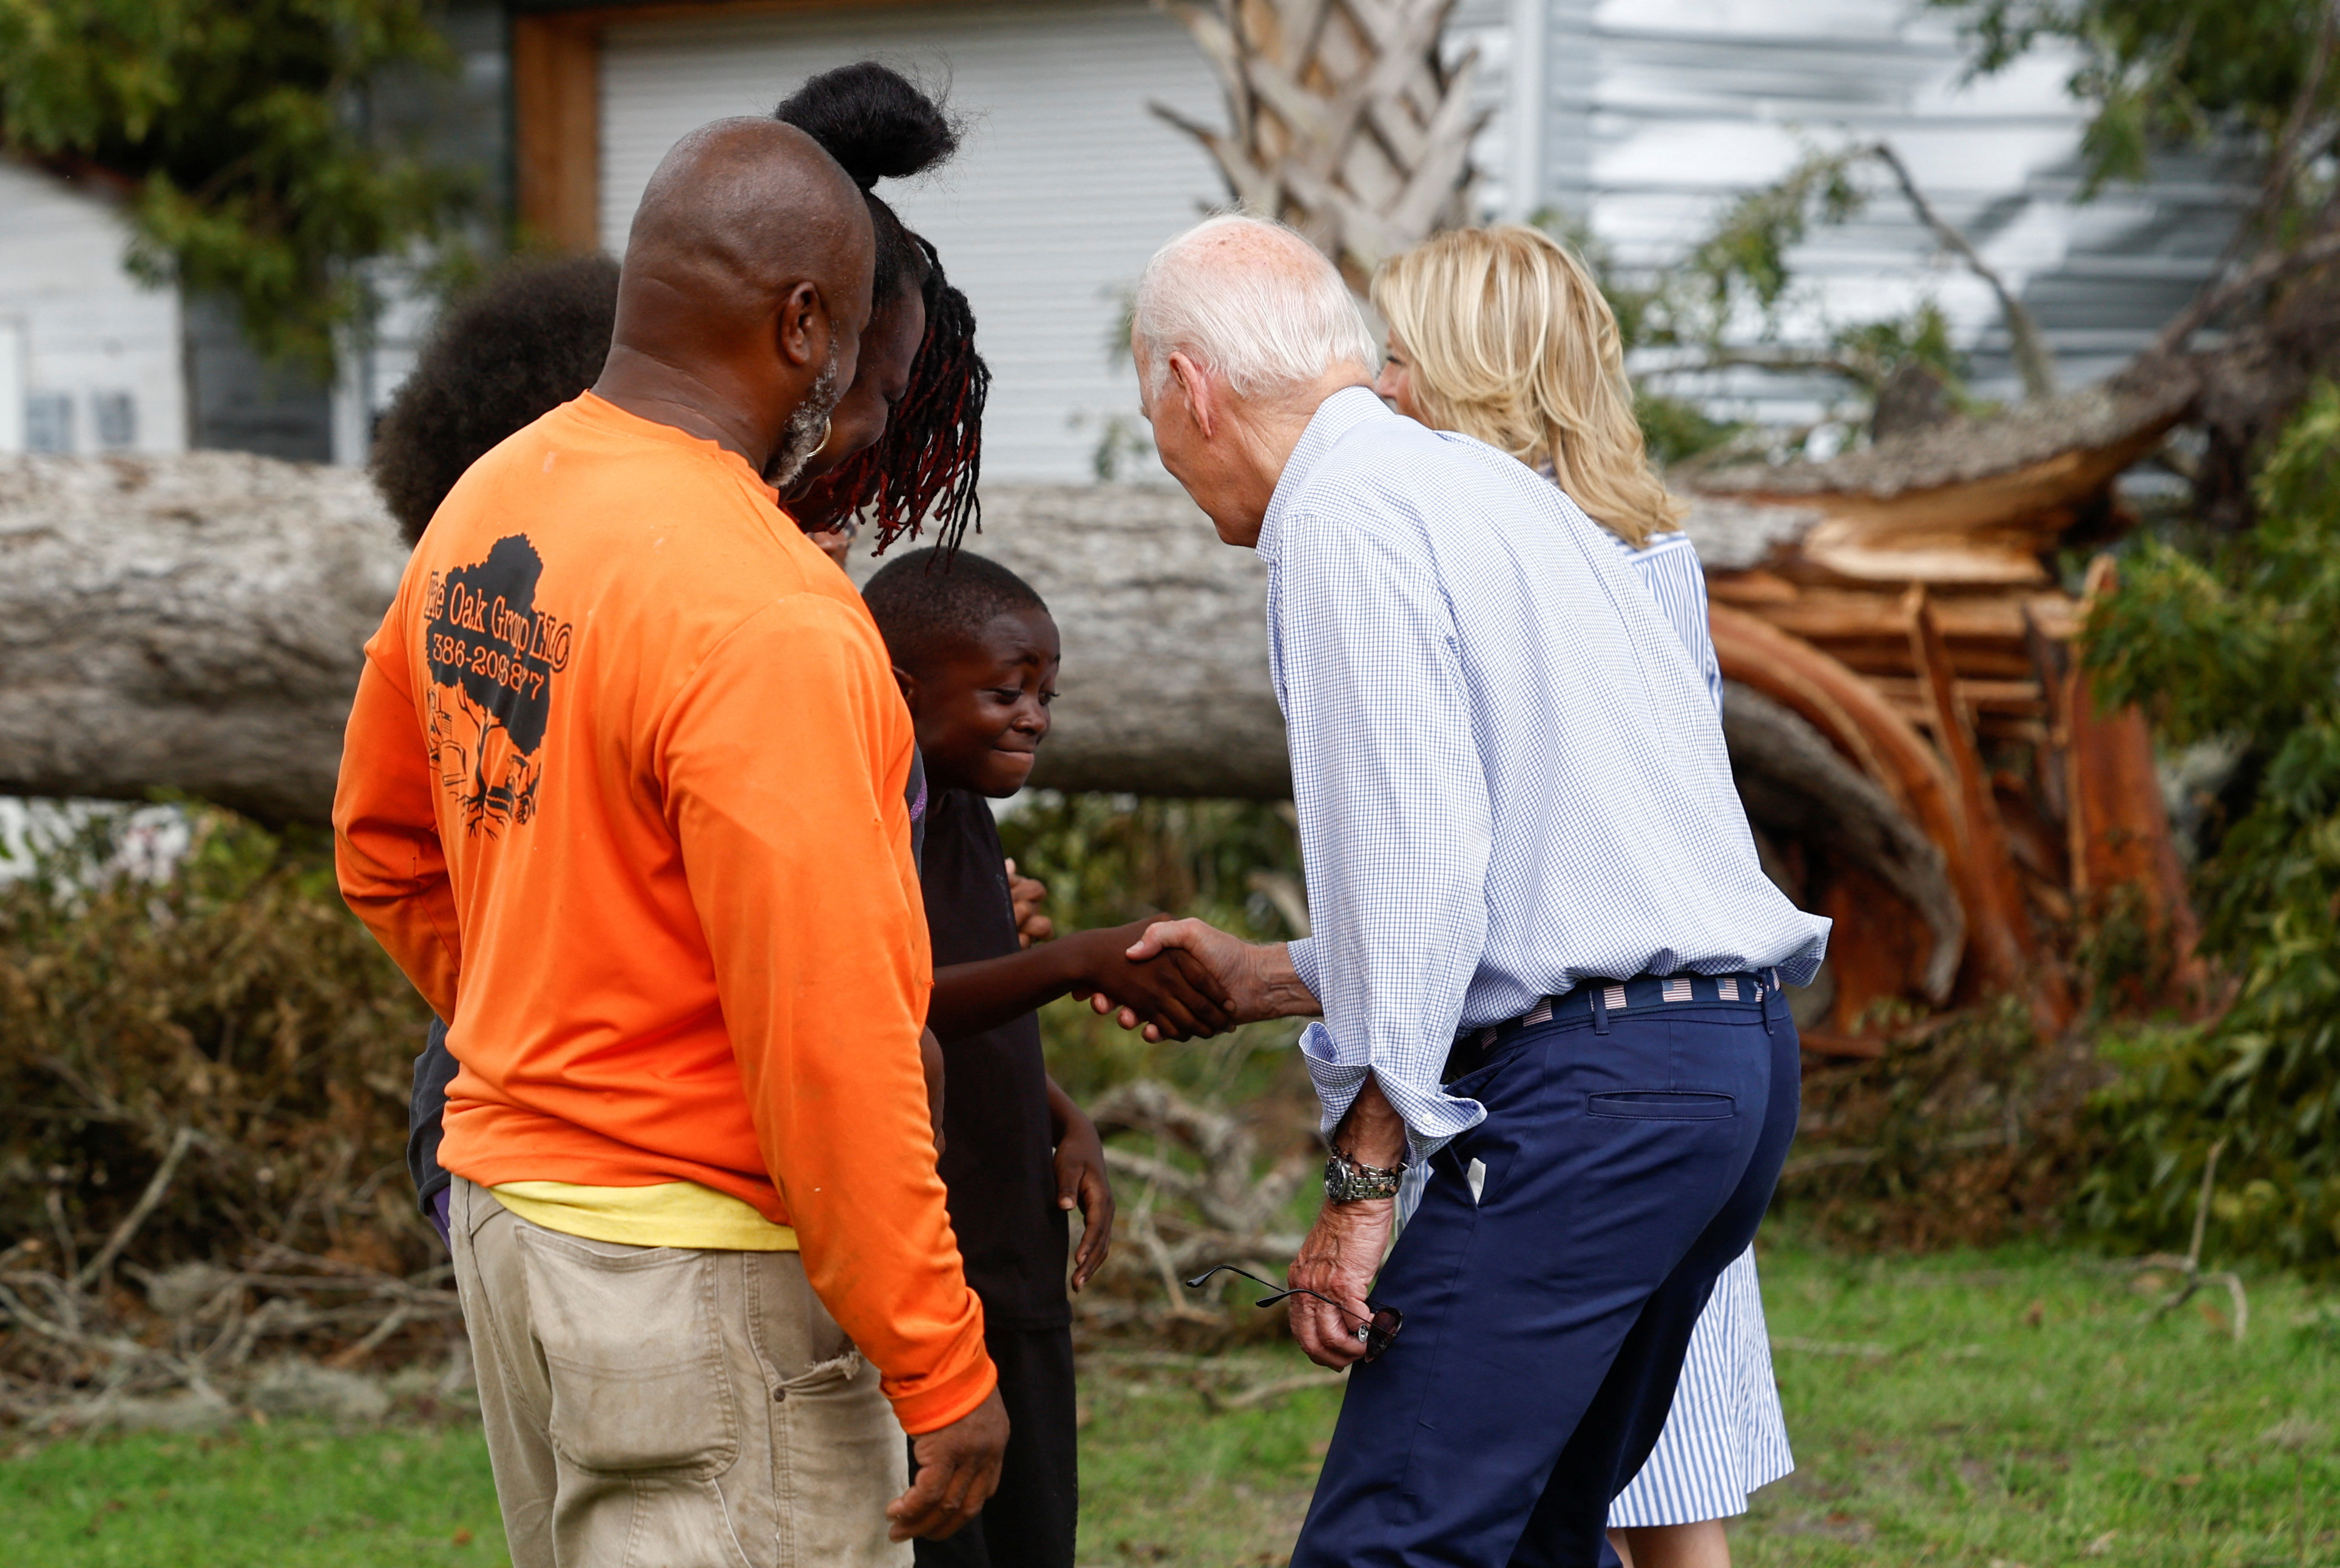 U.S. President Joe Biden visits Florida to view the damage caused by Hurricane Idalia storm